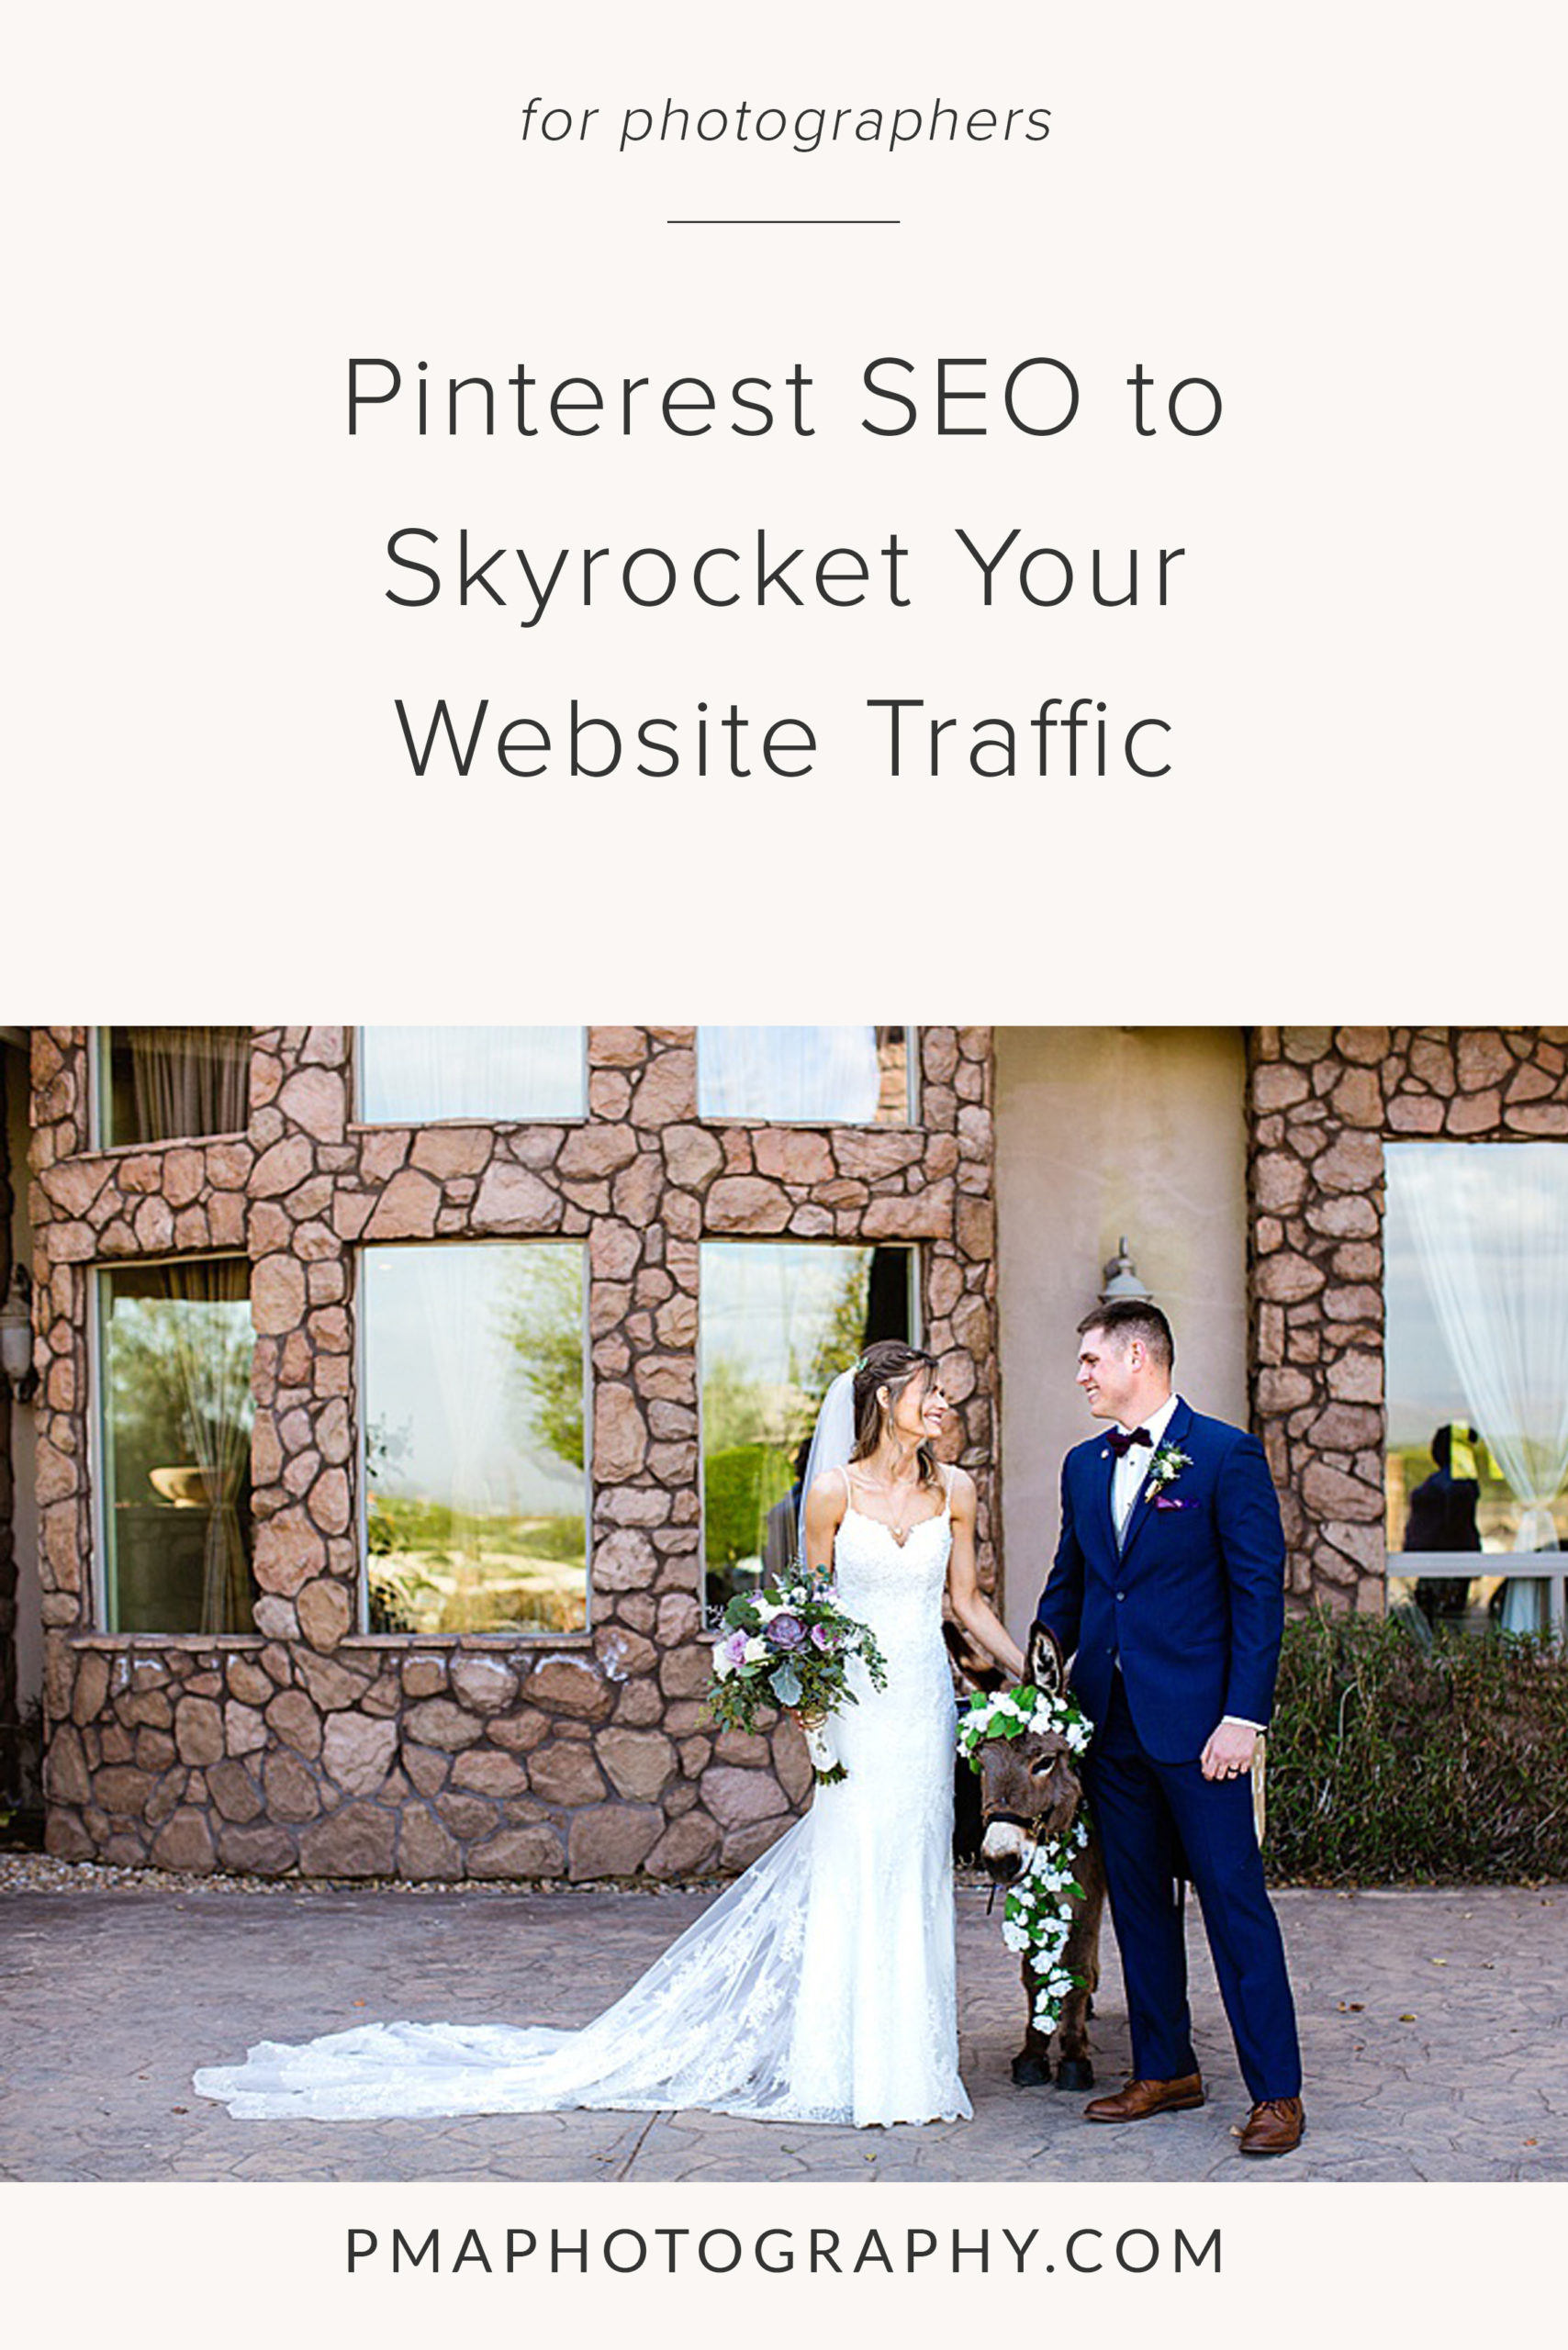 Pinterest SEO tips for wedding photographers to skyrocket your website traffic.